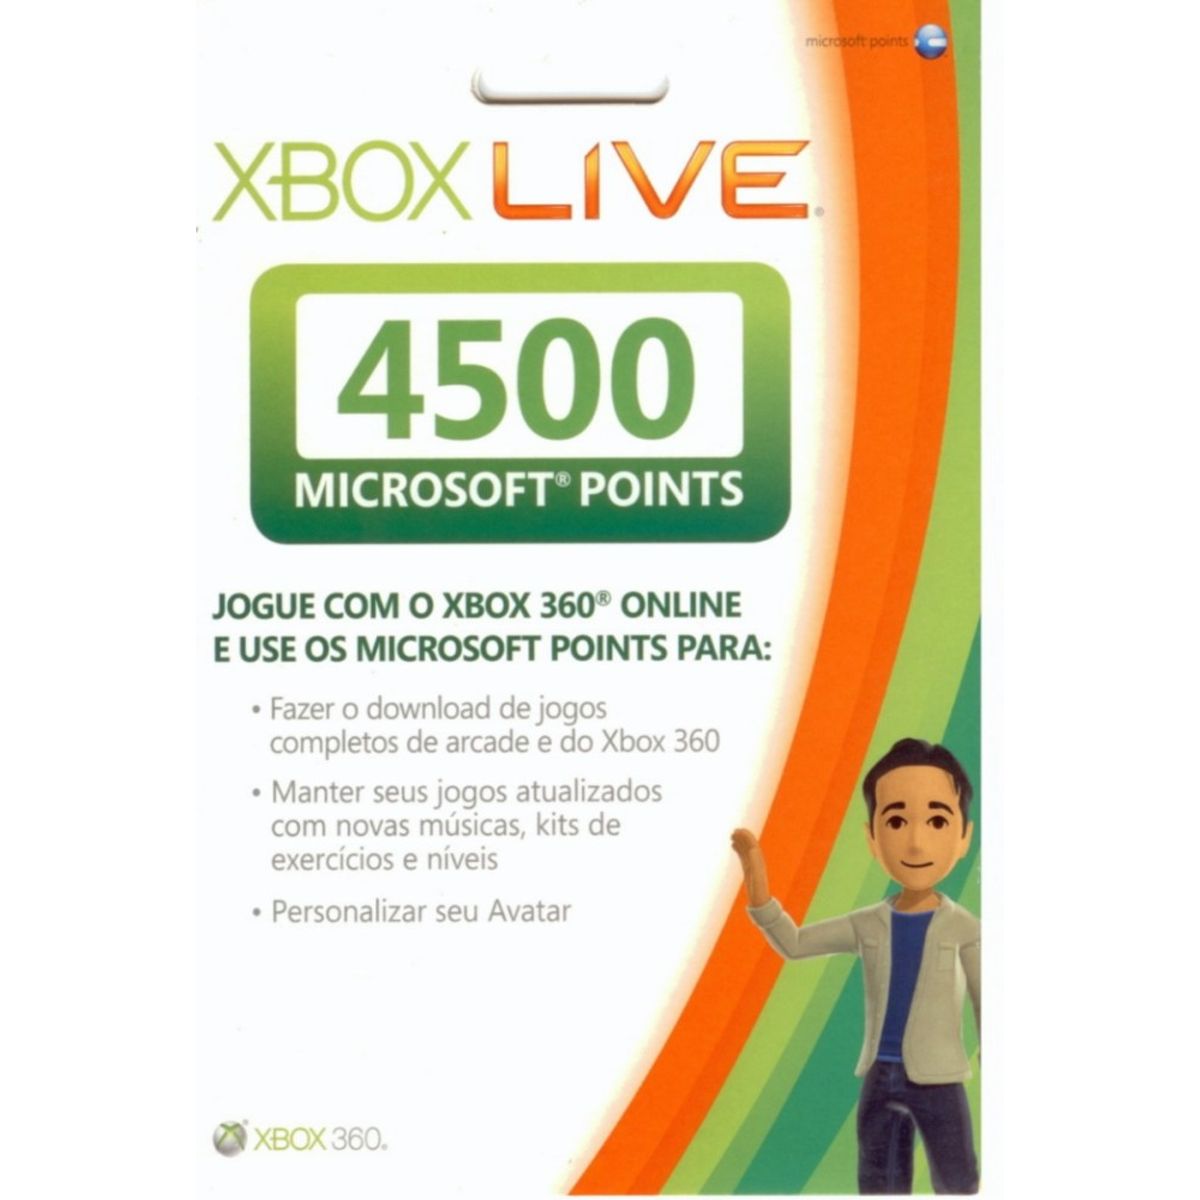 Arquivos jogos xbox 360 download iso completo gratis